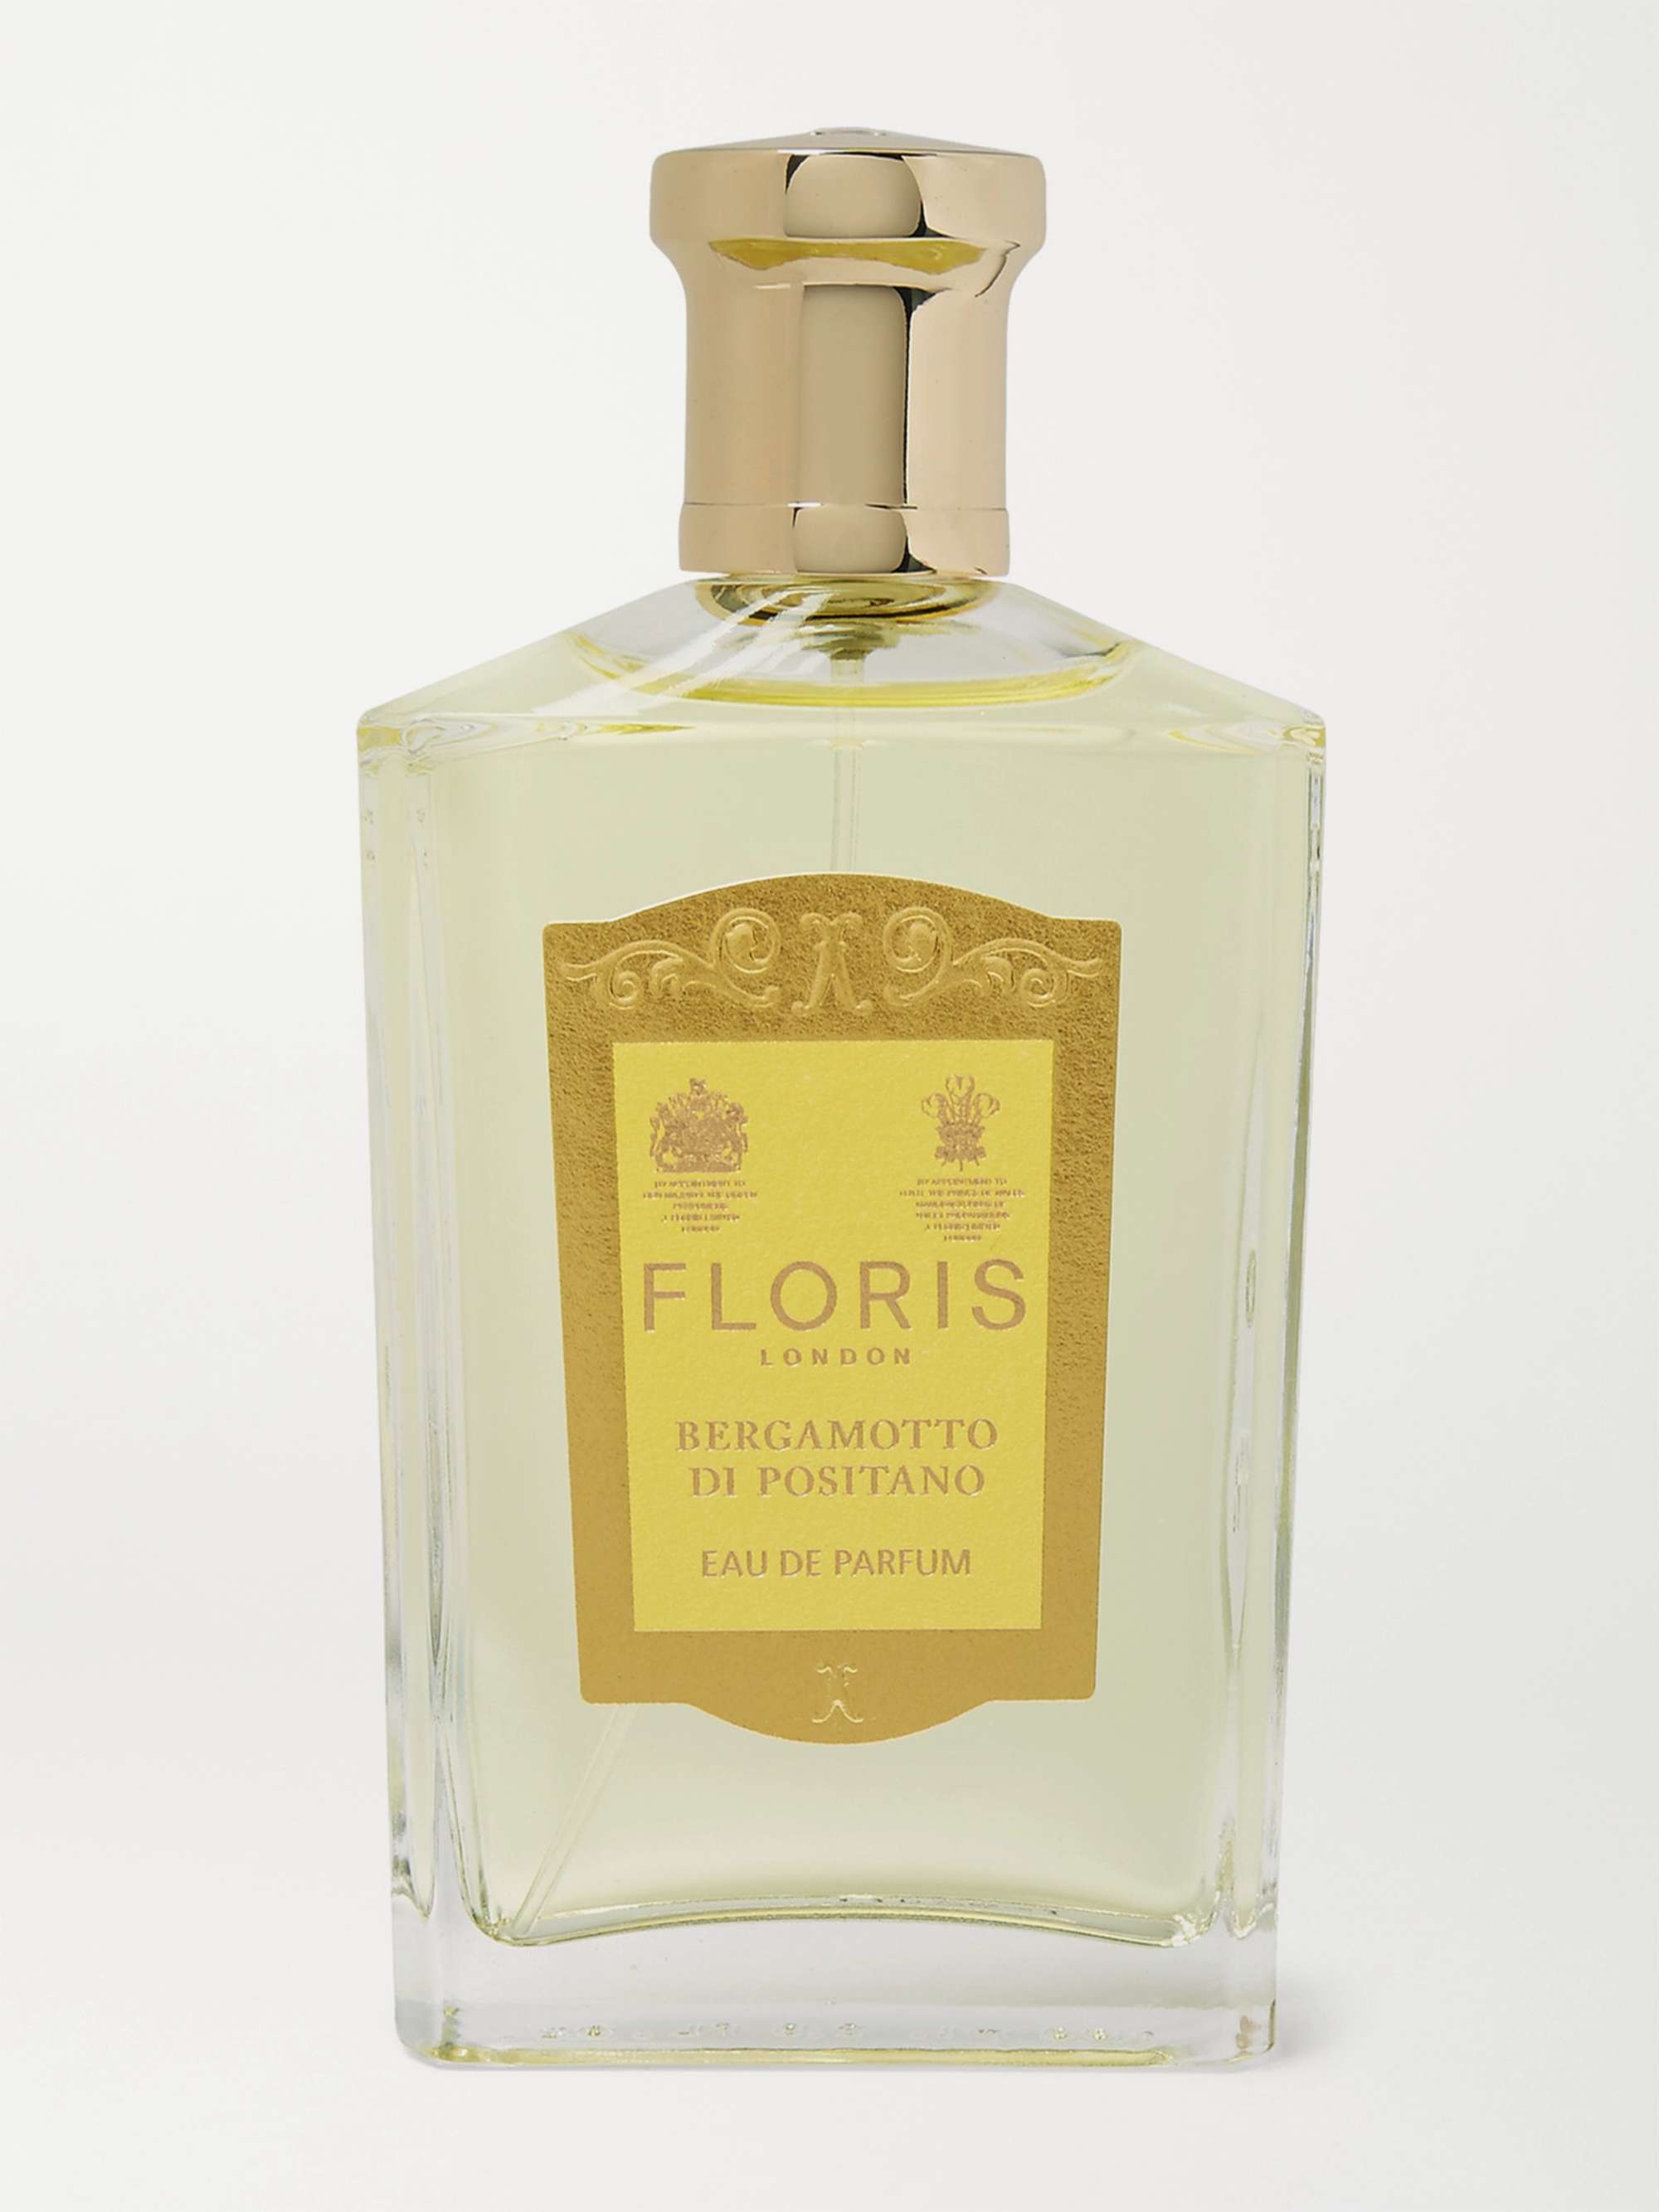 Floris London Bergamotto di Positano Eau de Parfum - Bergamot, Ambrette, 100ml